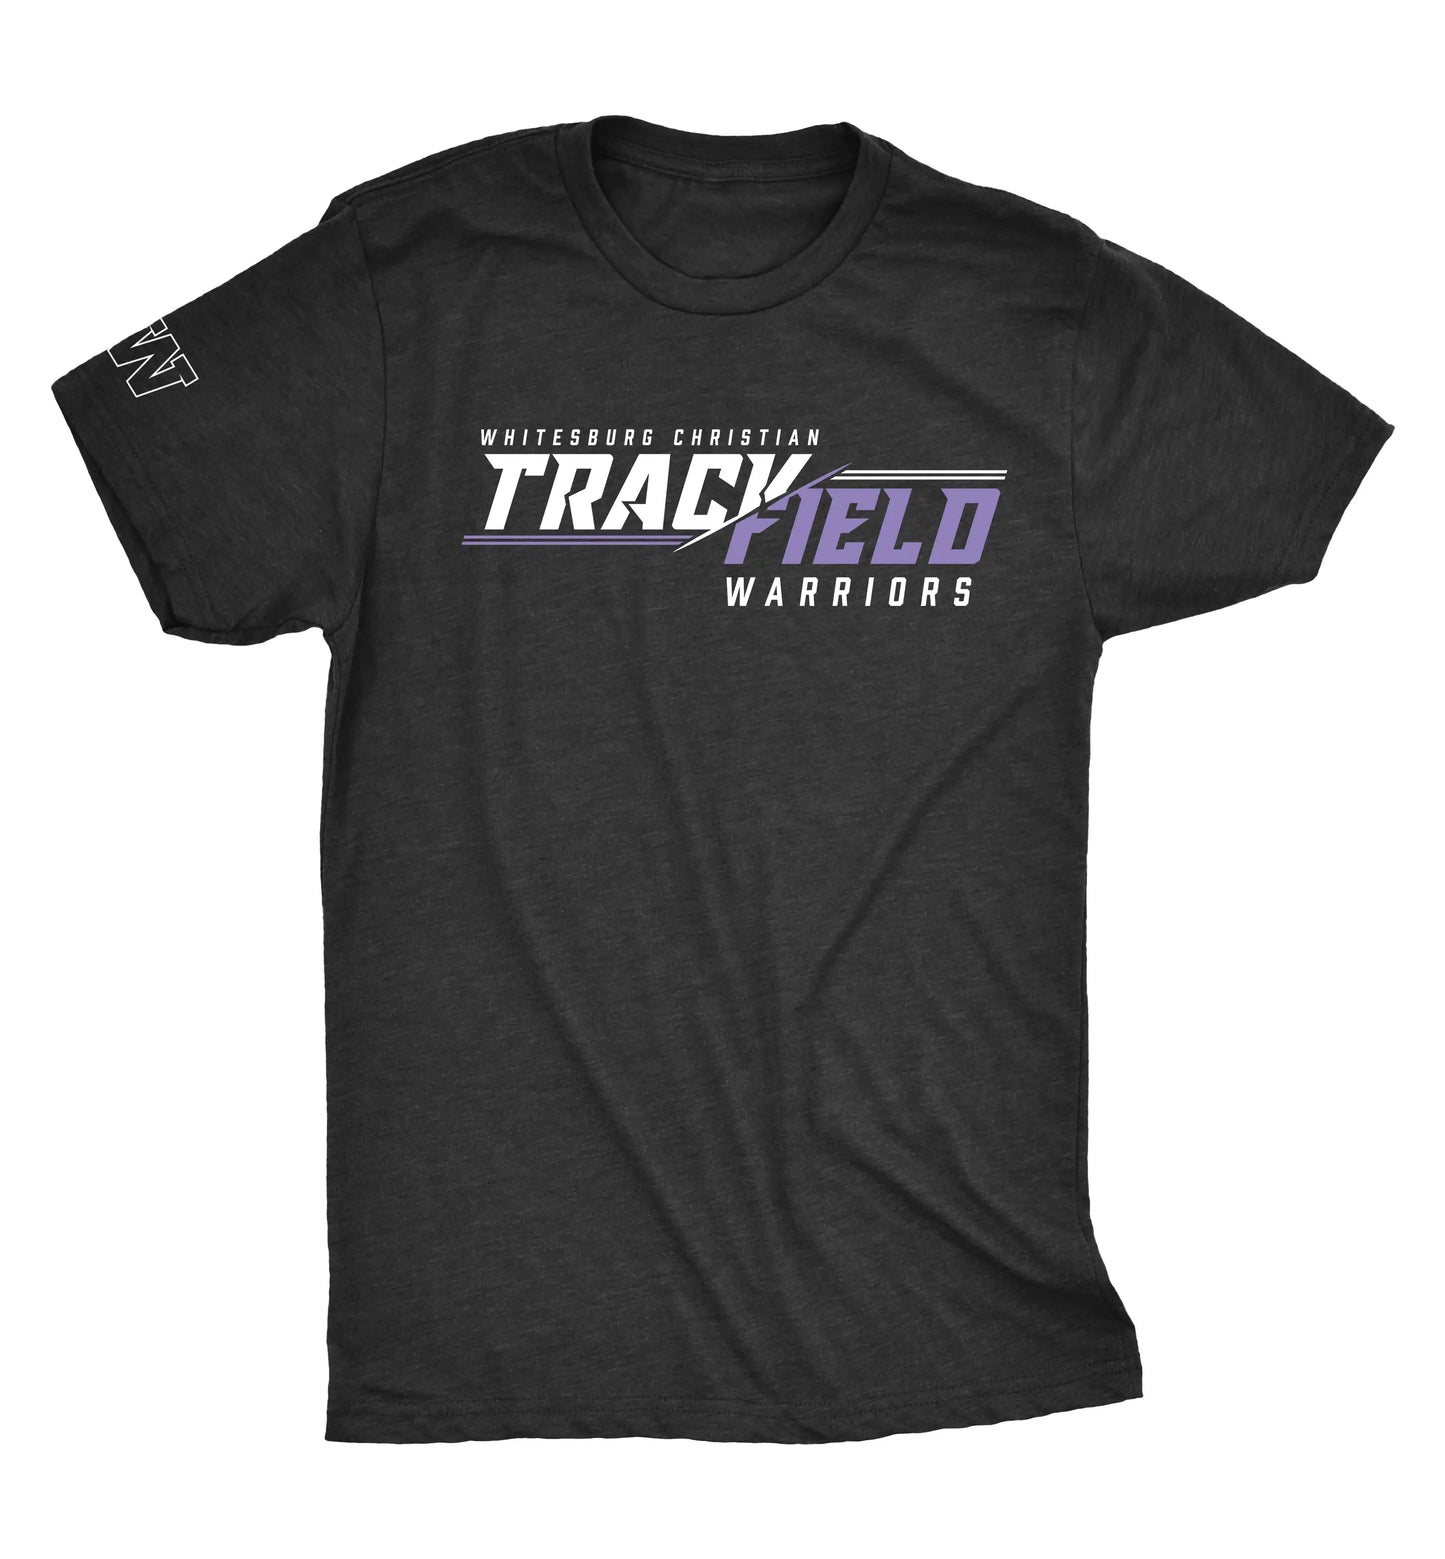 TRACK & FIELD - Warriors Tshirt